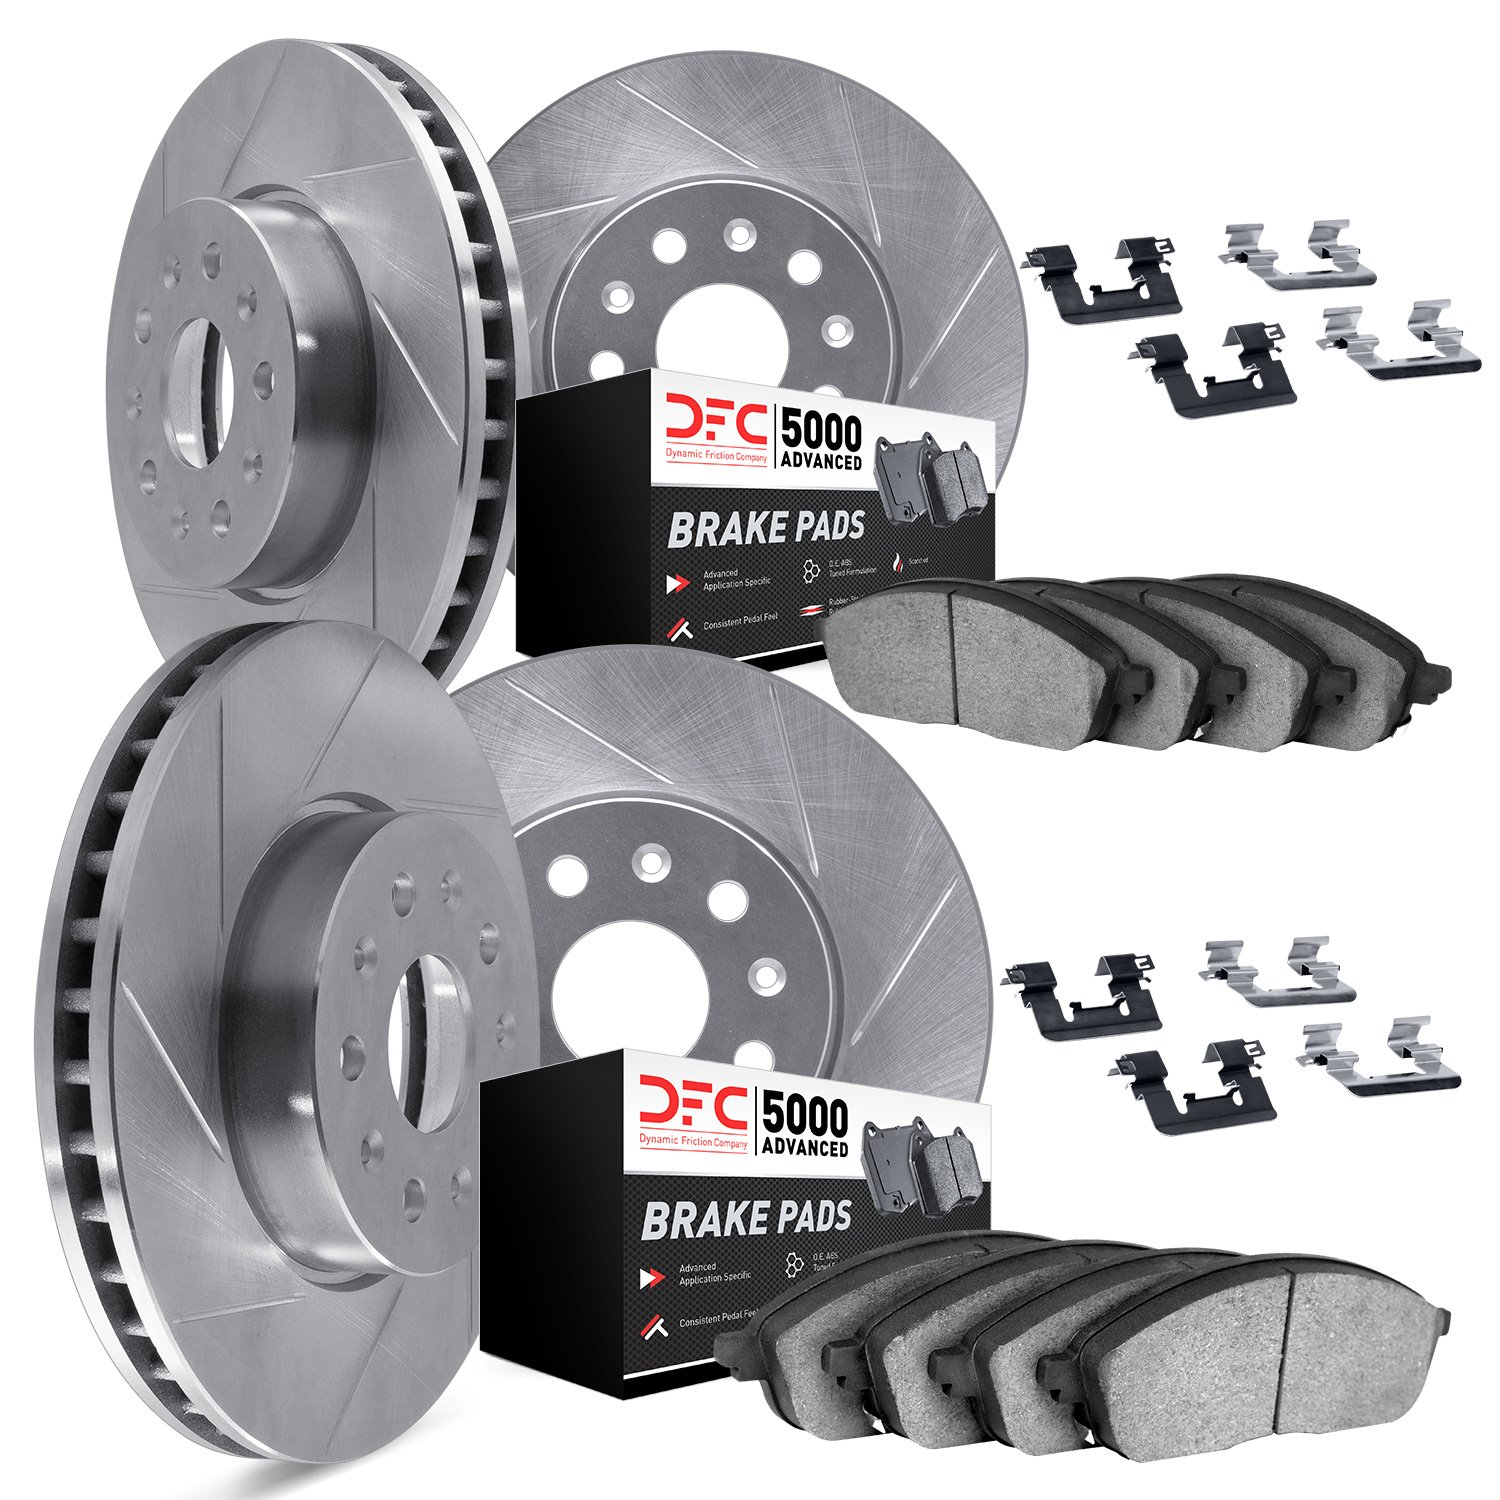 5514-67079 Slotted Brake Rotors w/5000 Advanced Brake Pads Kit & Hardware [Silver], Fits Select Multiple Makes/Models, Position: